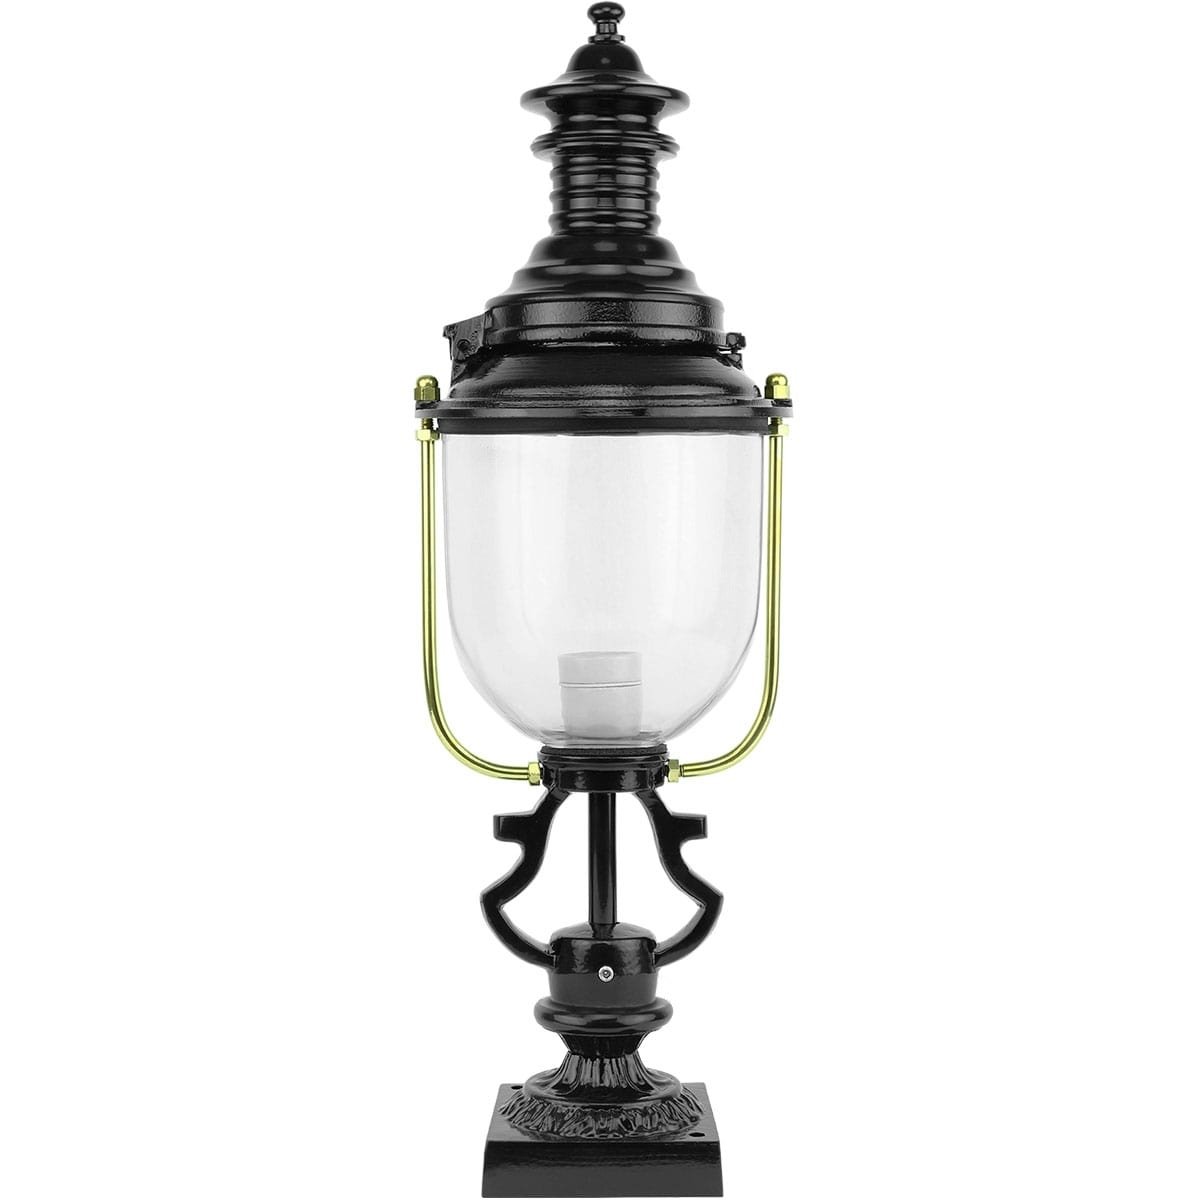 Floor lantern outdoor Bartlehiem - 65 cm